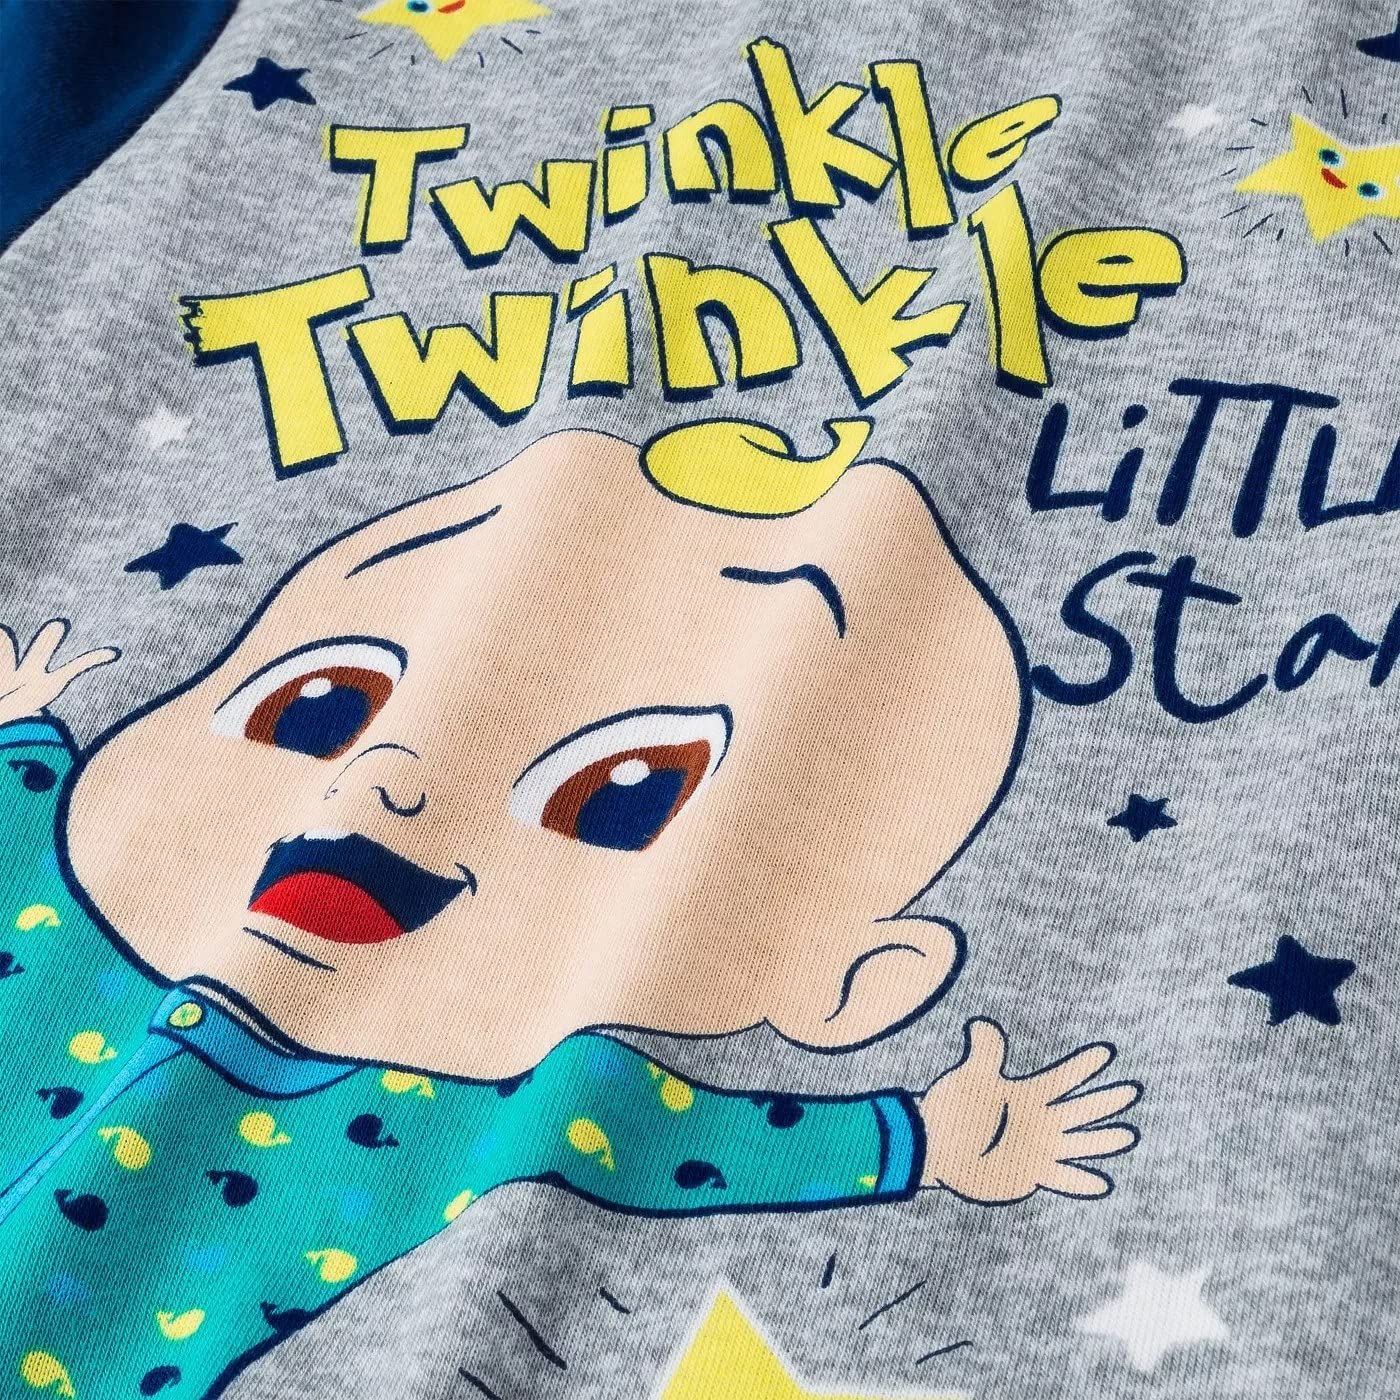 Cocomelon "Twinkle Twinkle Little Star" 4-Piece Sleep Set Toddler